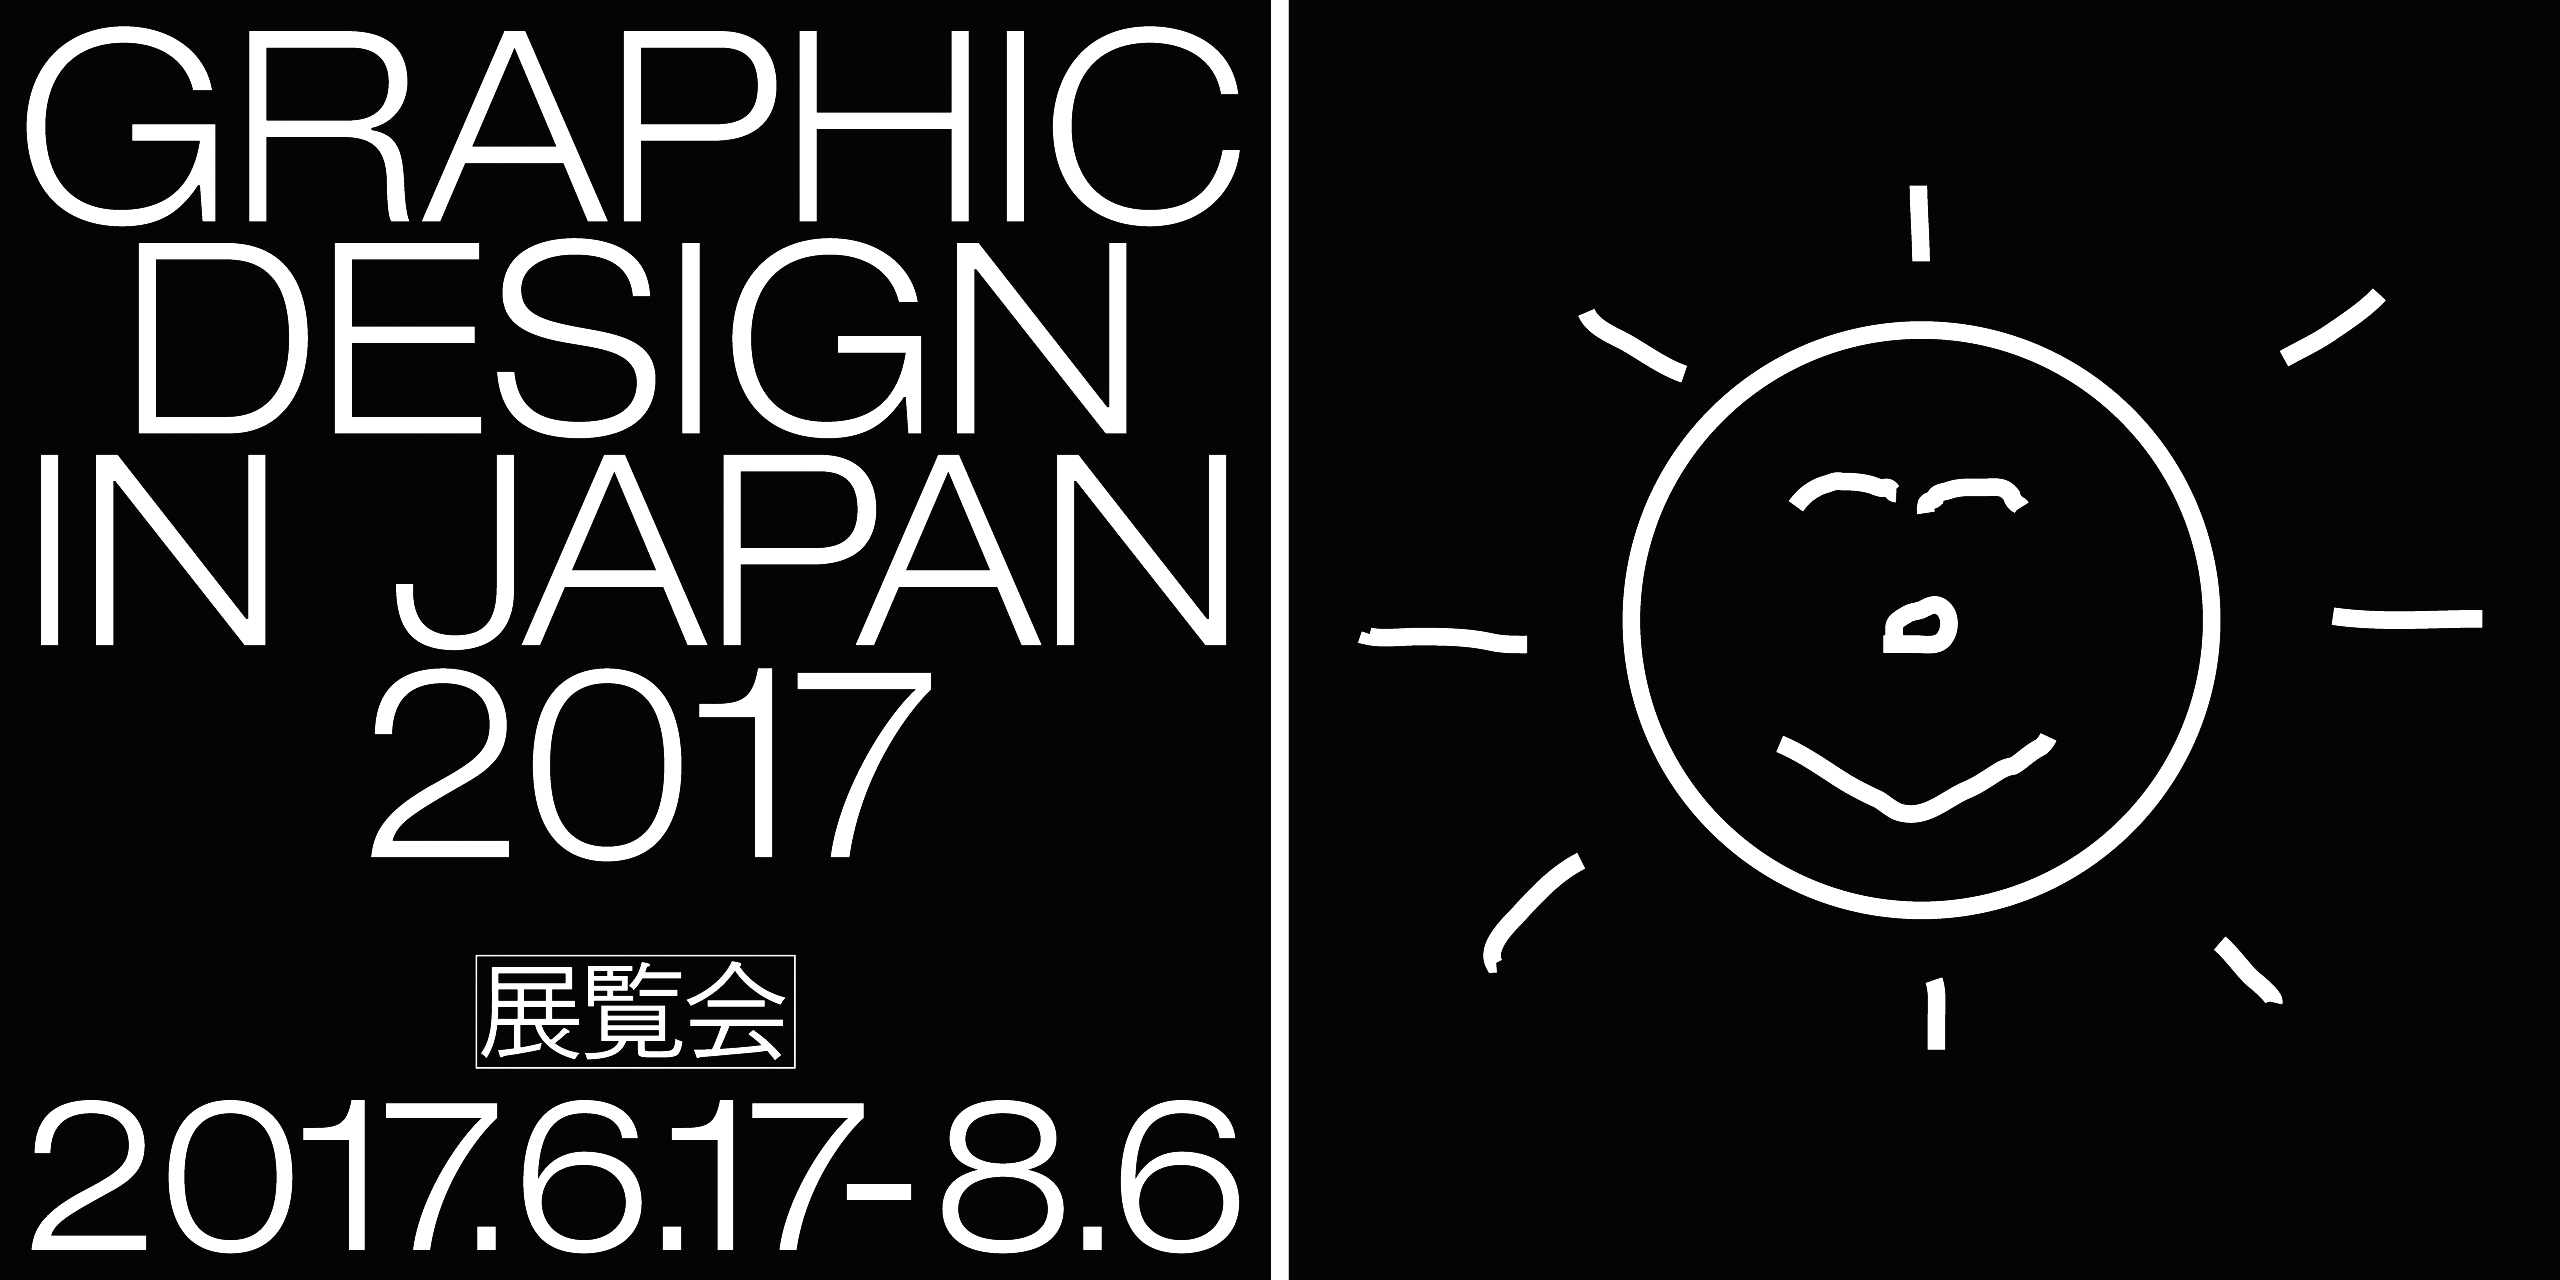 Graphic Design in Japan 2017 | Tokyo Midtown Design Hub